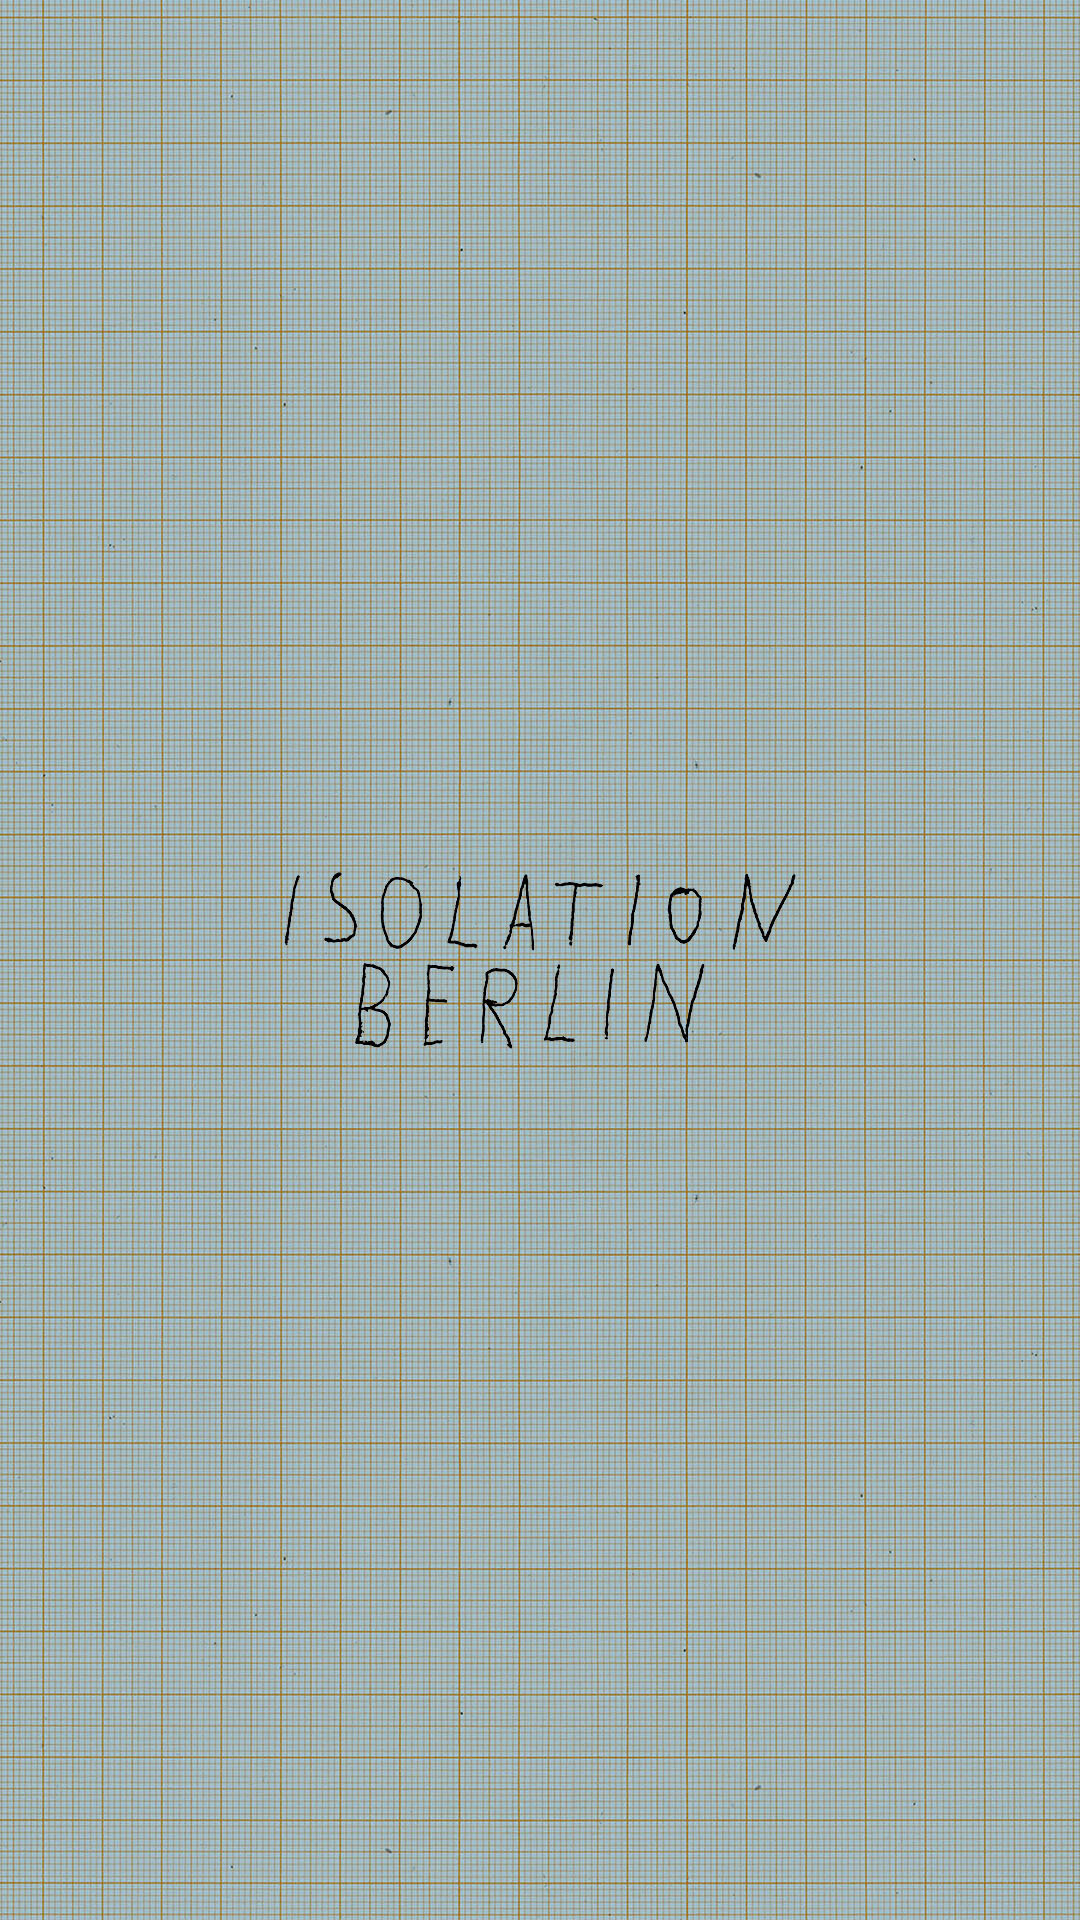 Isolation Berlin